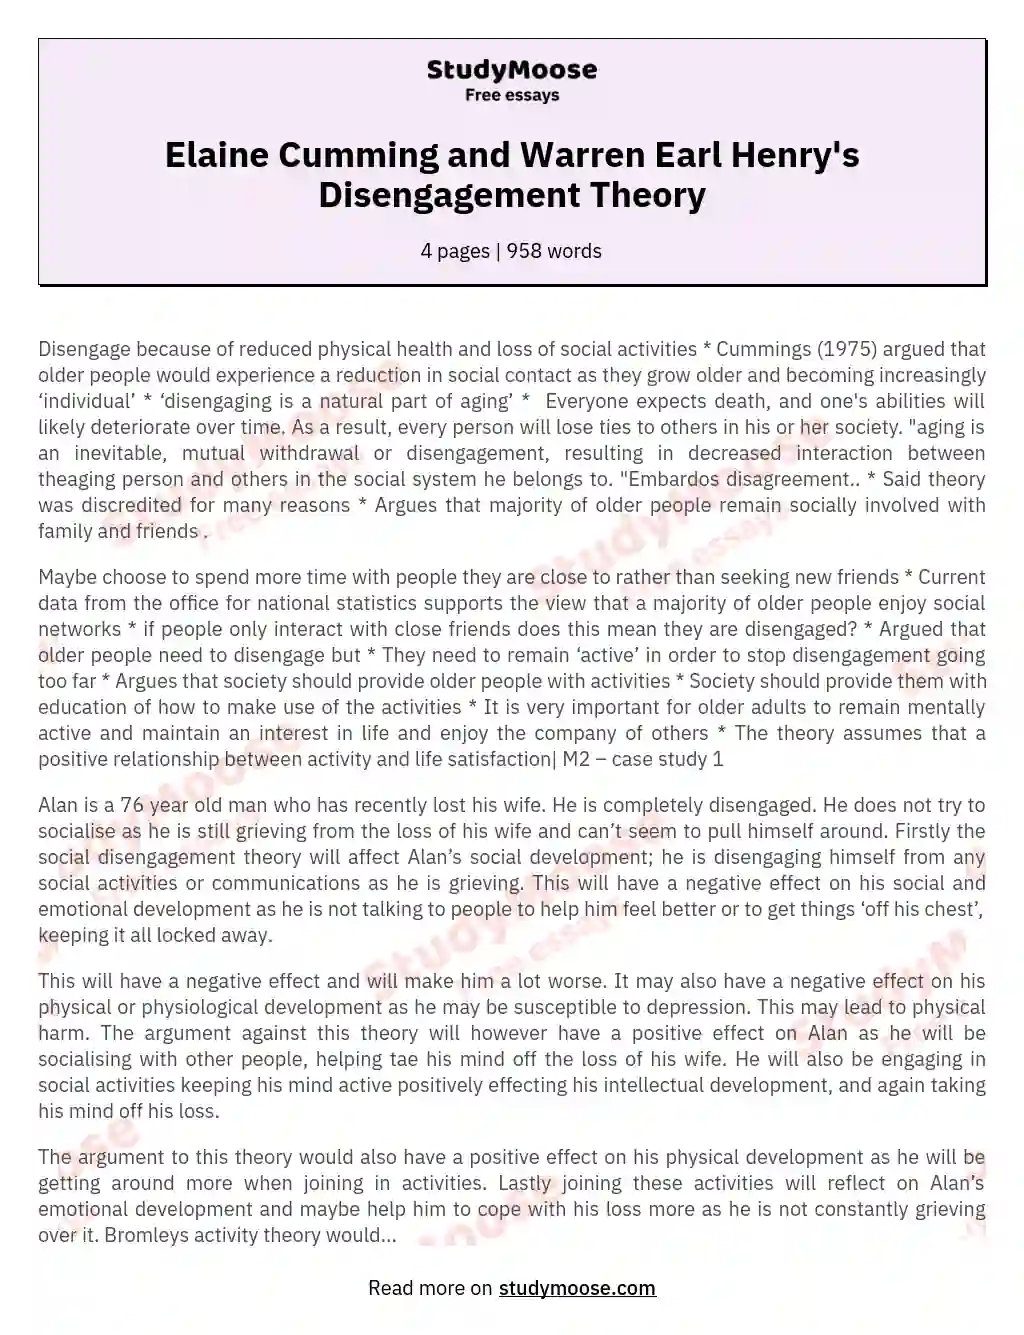 Elaine Cumming and Warren Earl Henry's Disengagement Theory